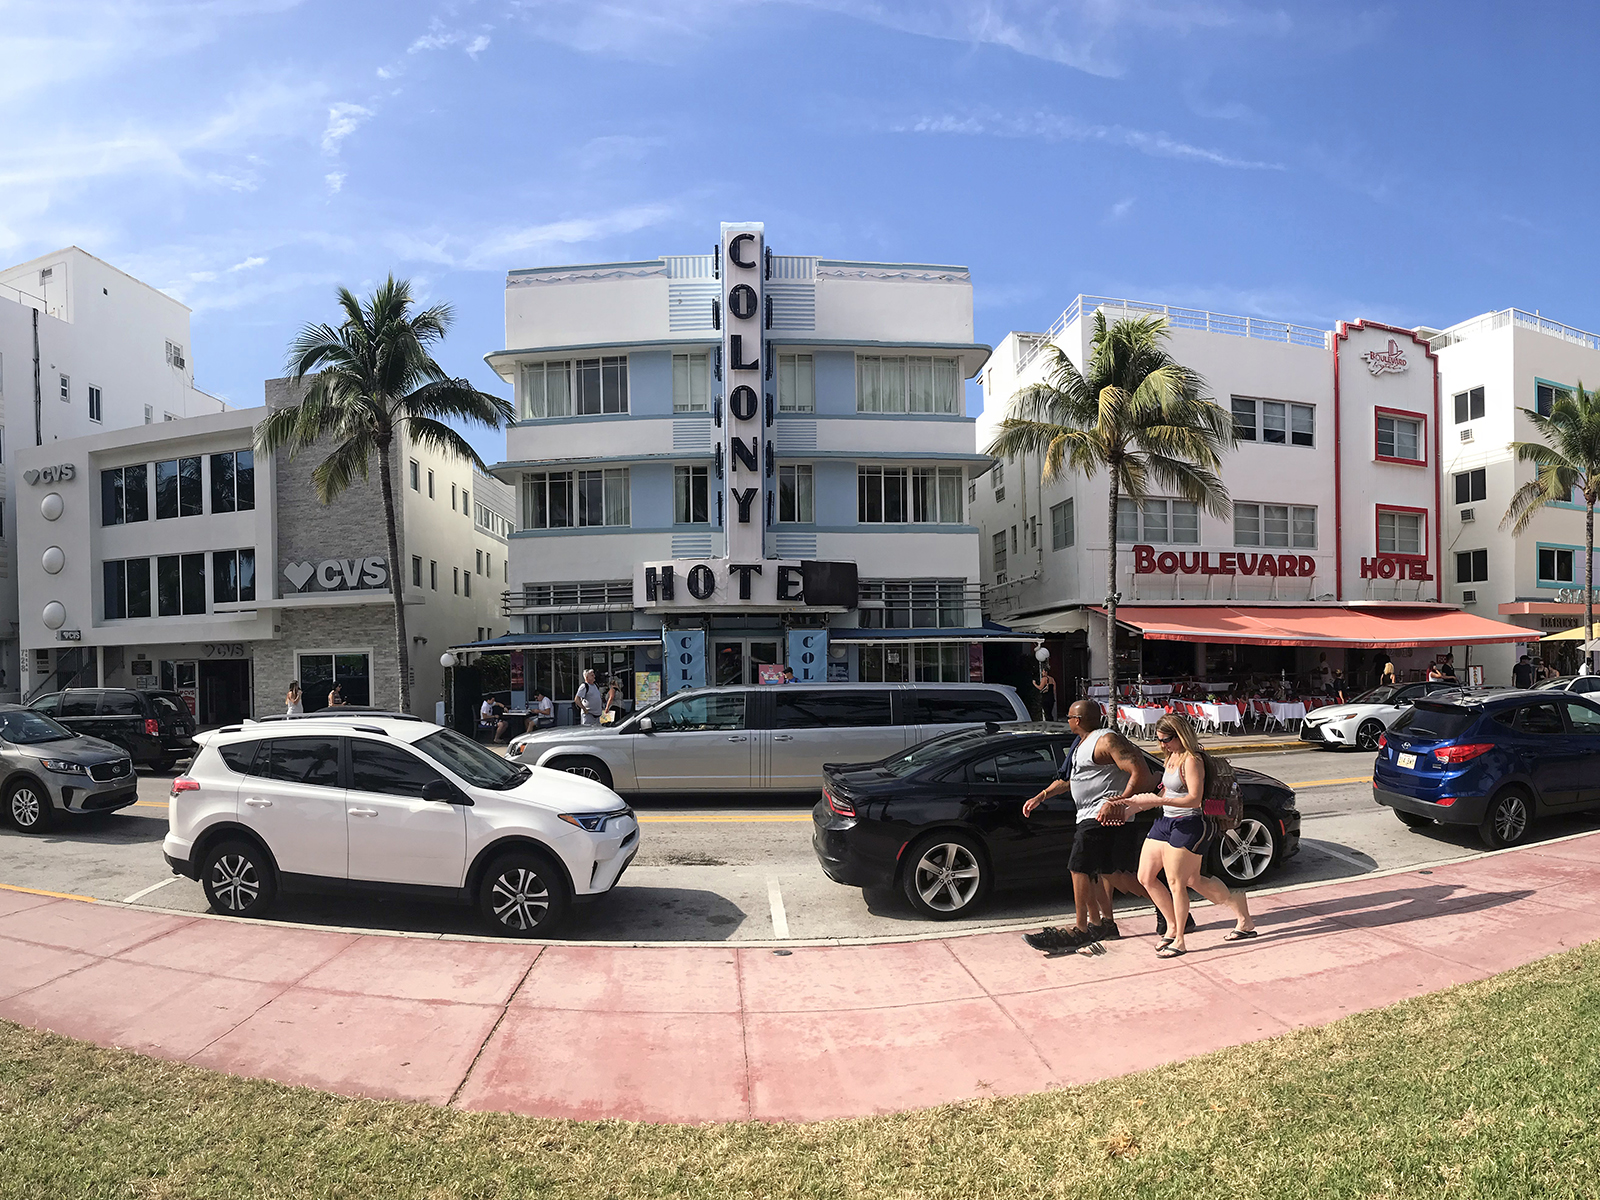 Dexter-Drehorte: 9 Locations in Miami, wo man Dexter Morgan begegnen kann 